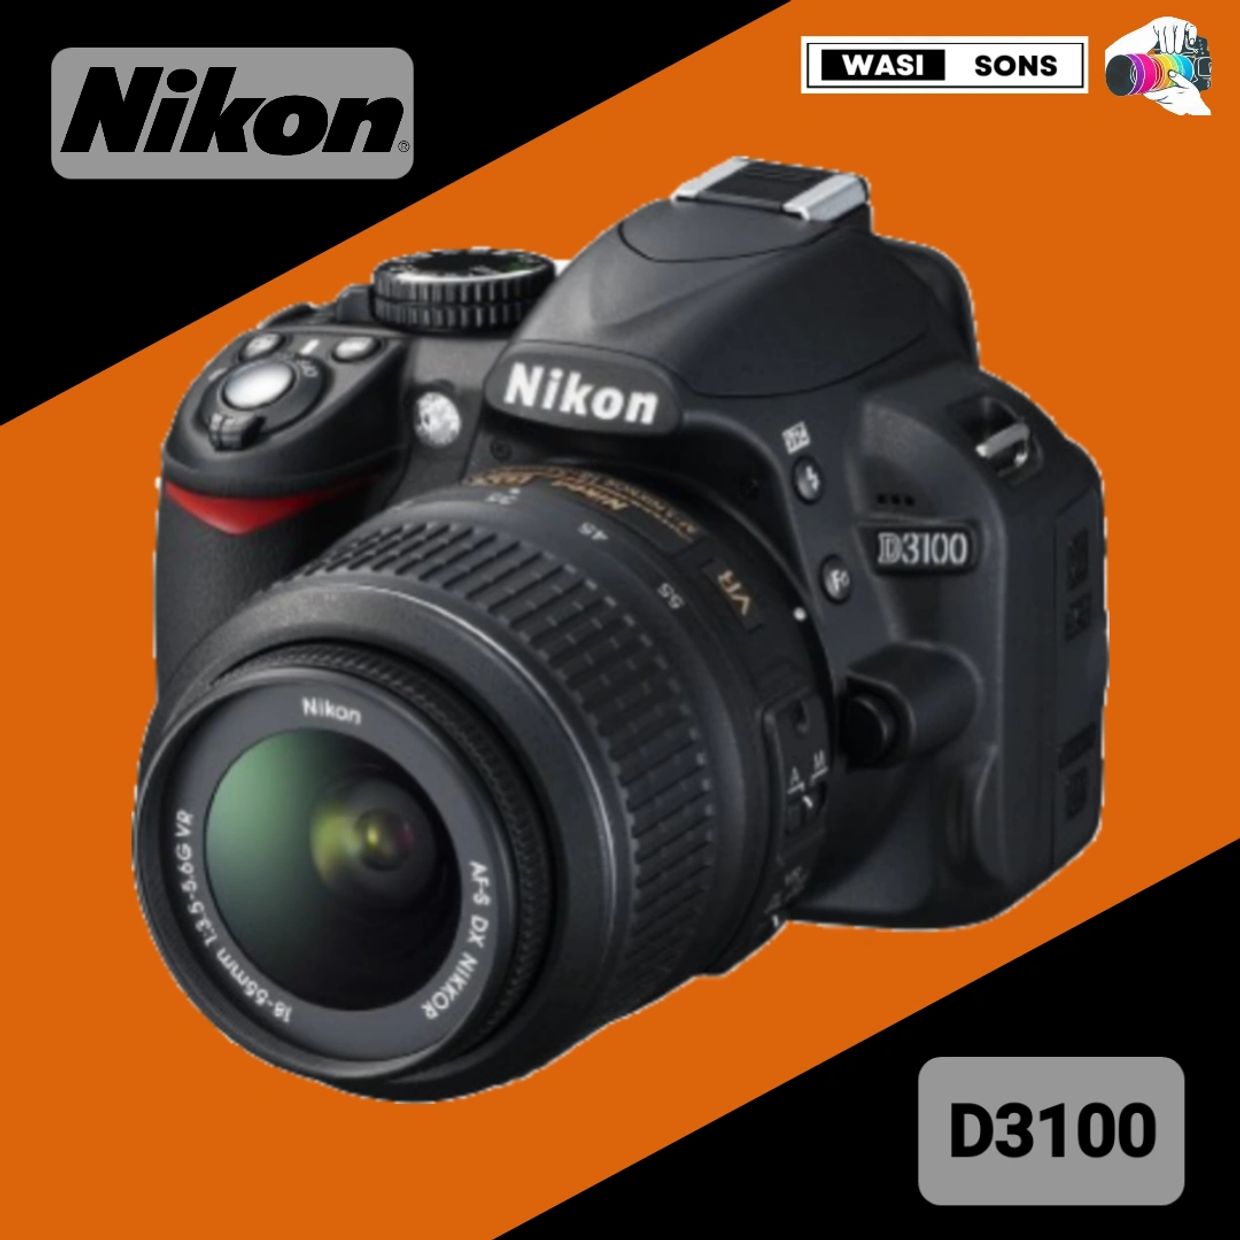 Best Nikon Camera - Wasi Sons Camera & Electronic